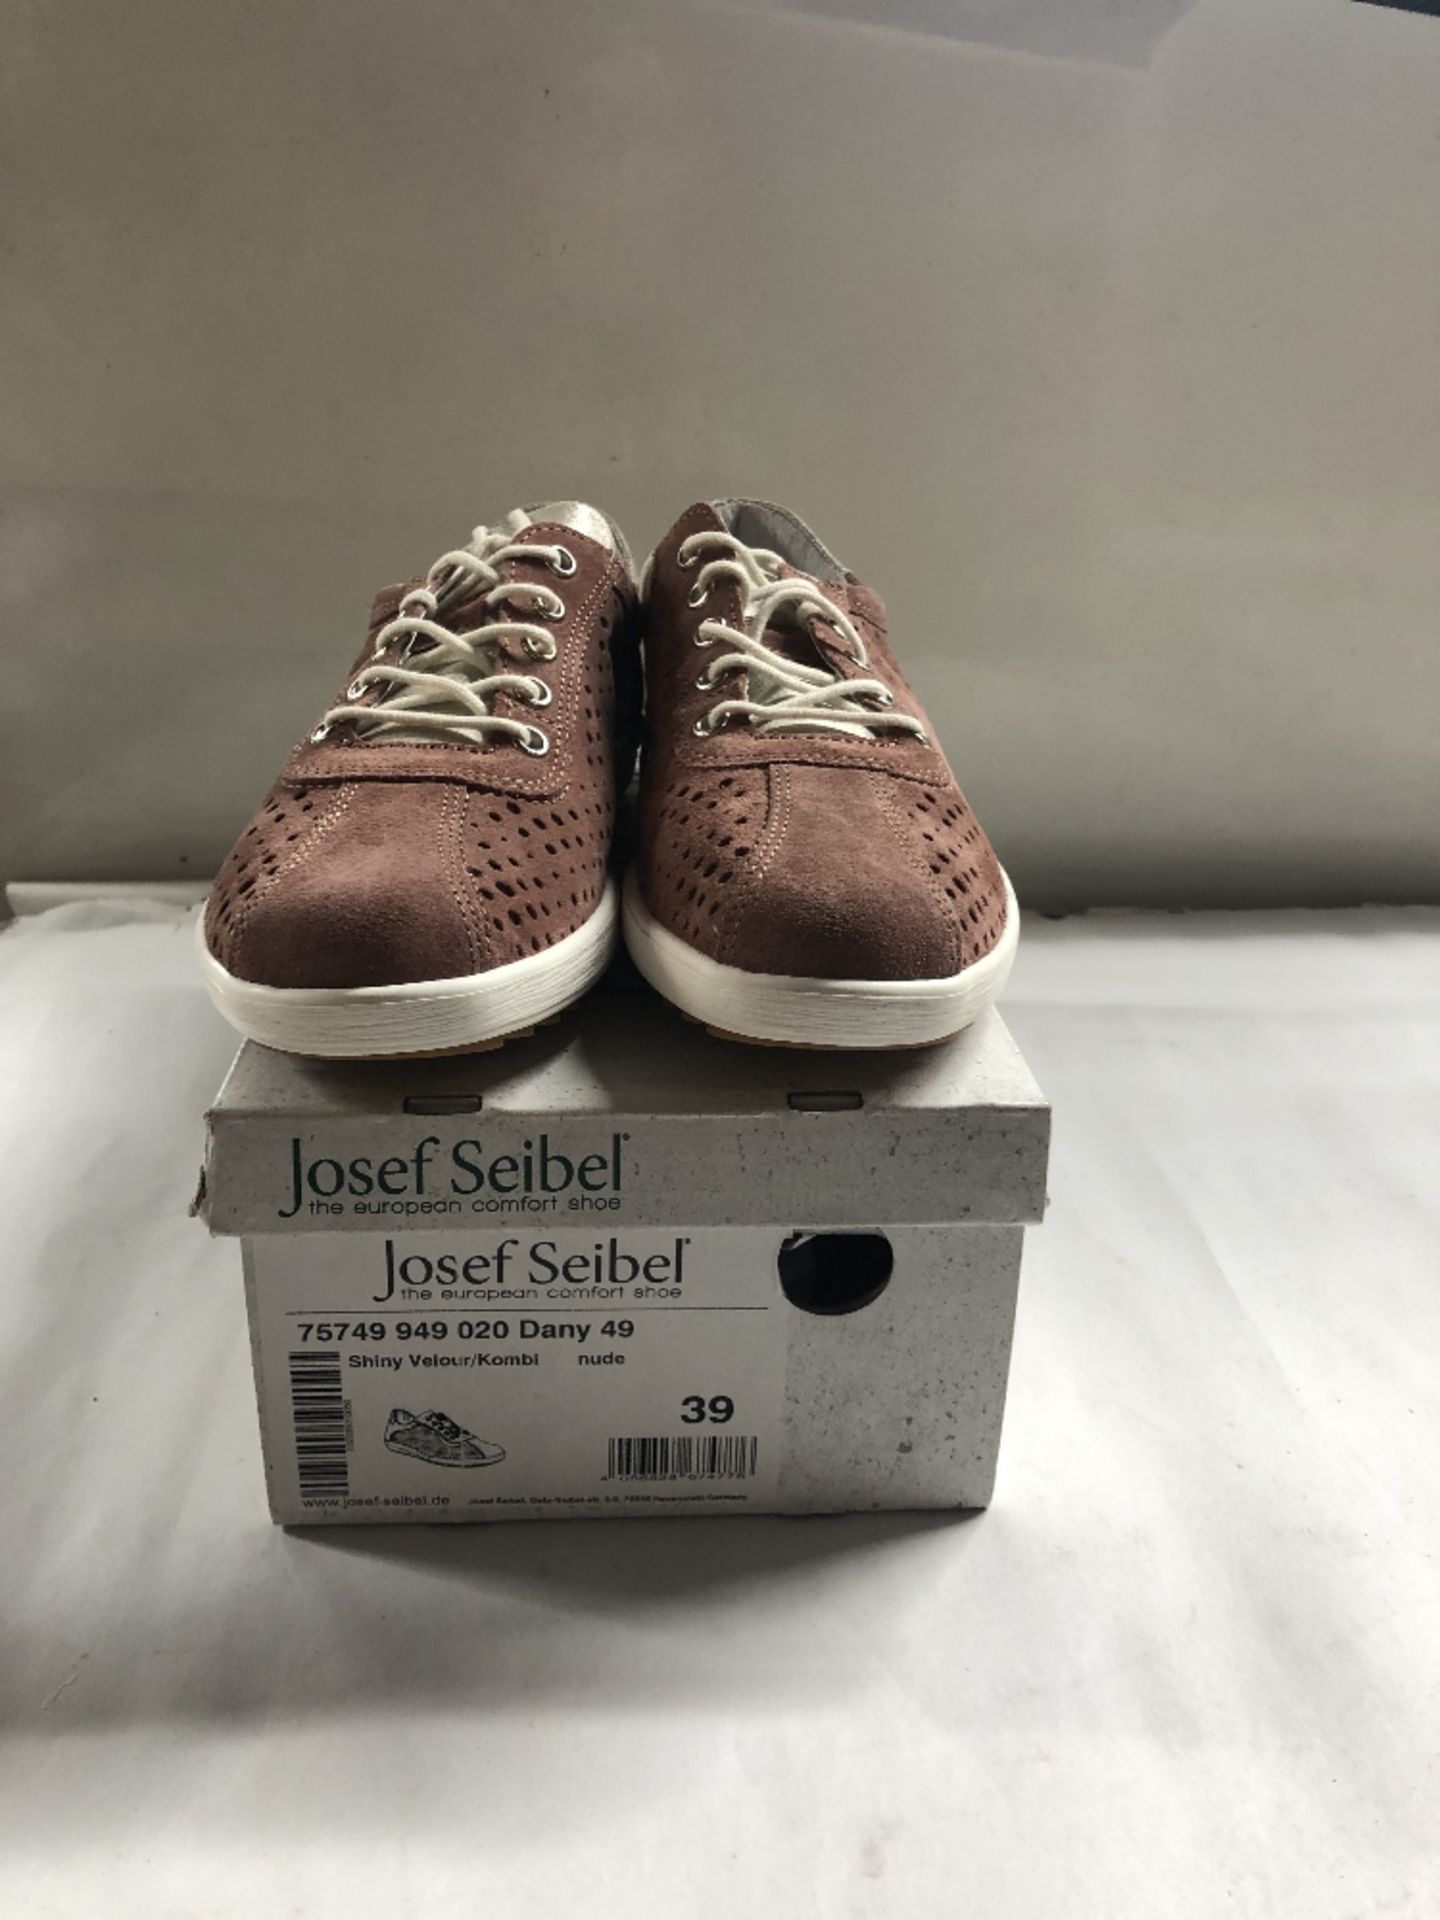 Josef Seibel Shoes. Eur 39 - Image 2 of 3